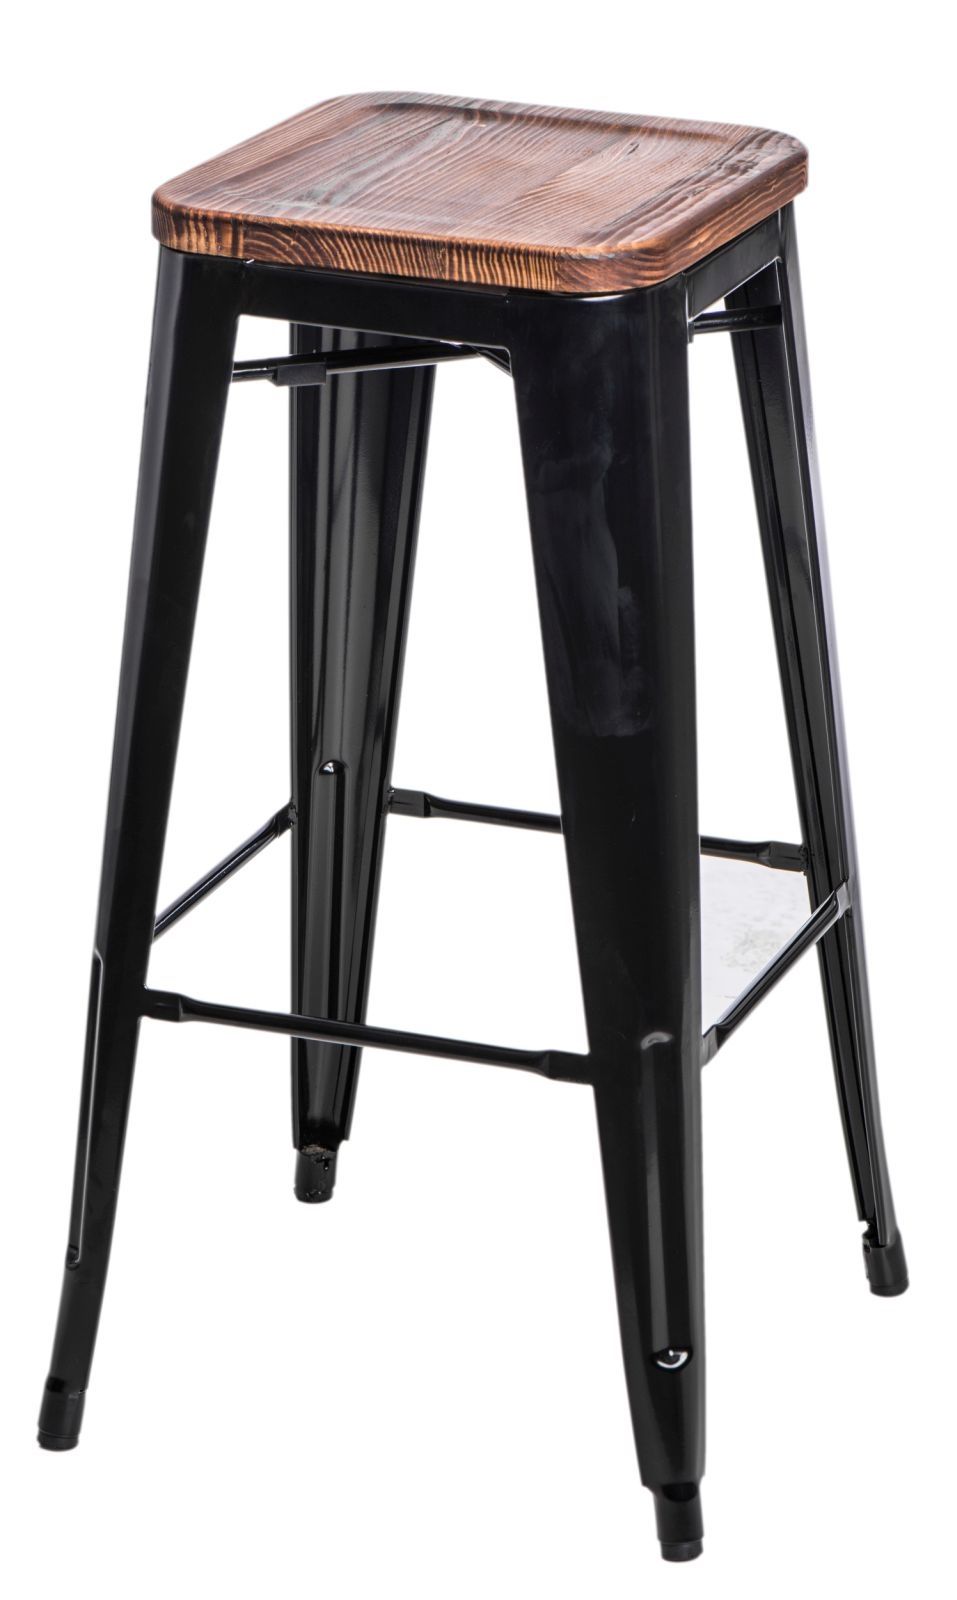  Barová stolička Paris Wood 75cm čierna sosna - mobler.sk